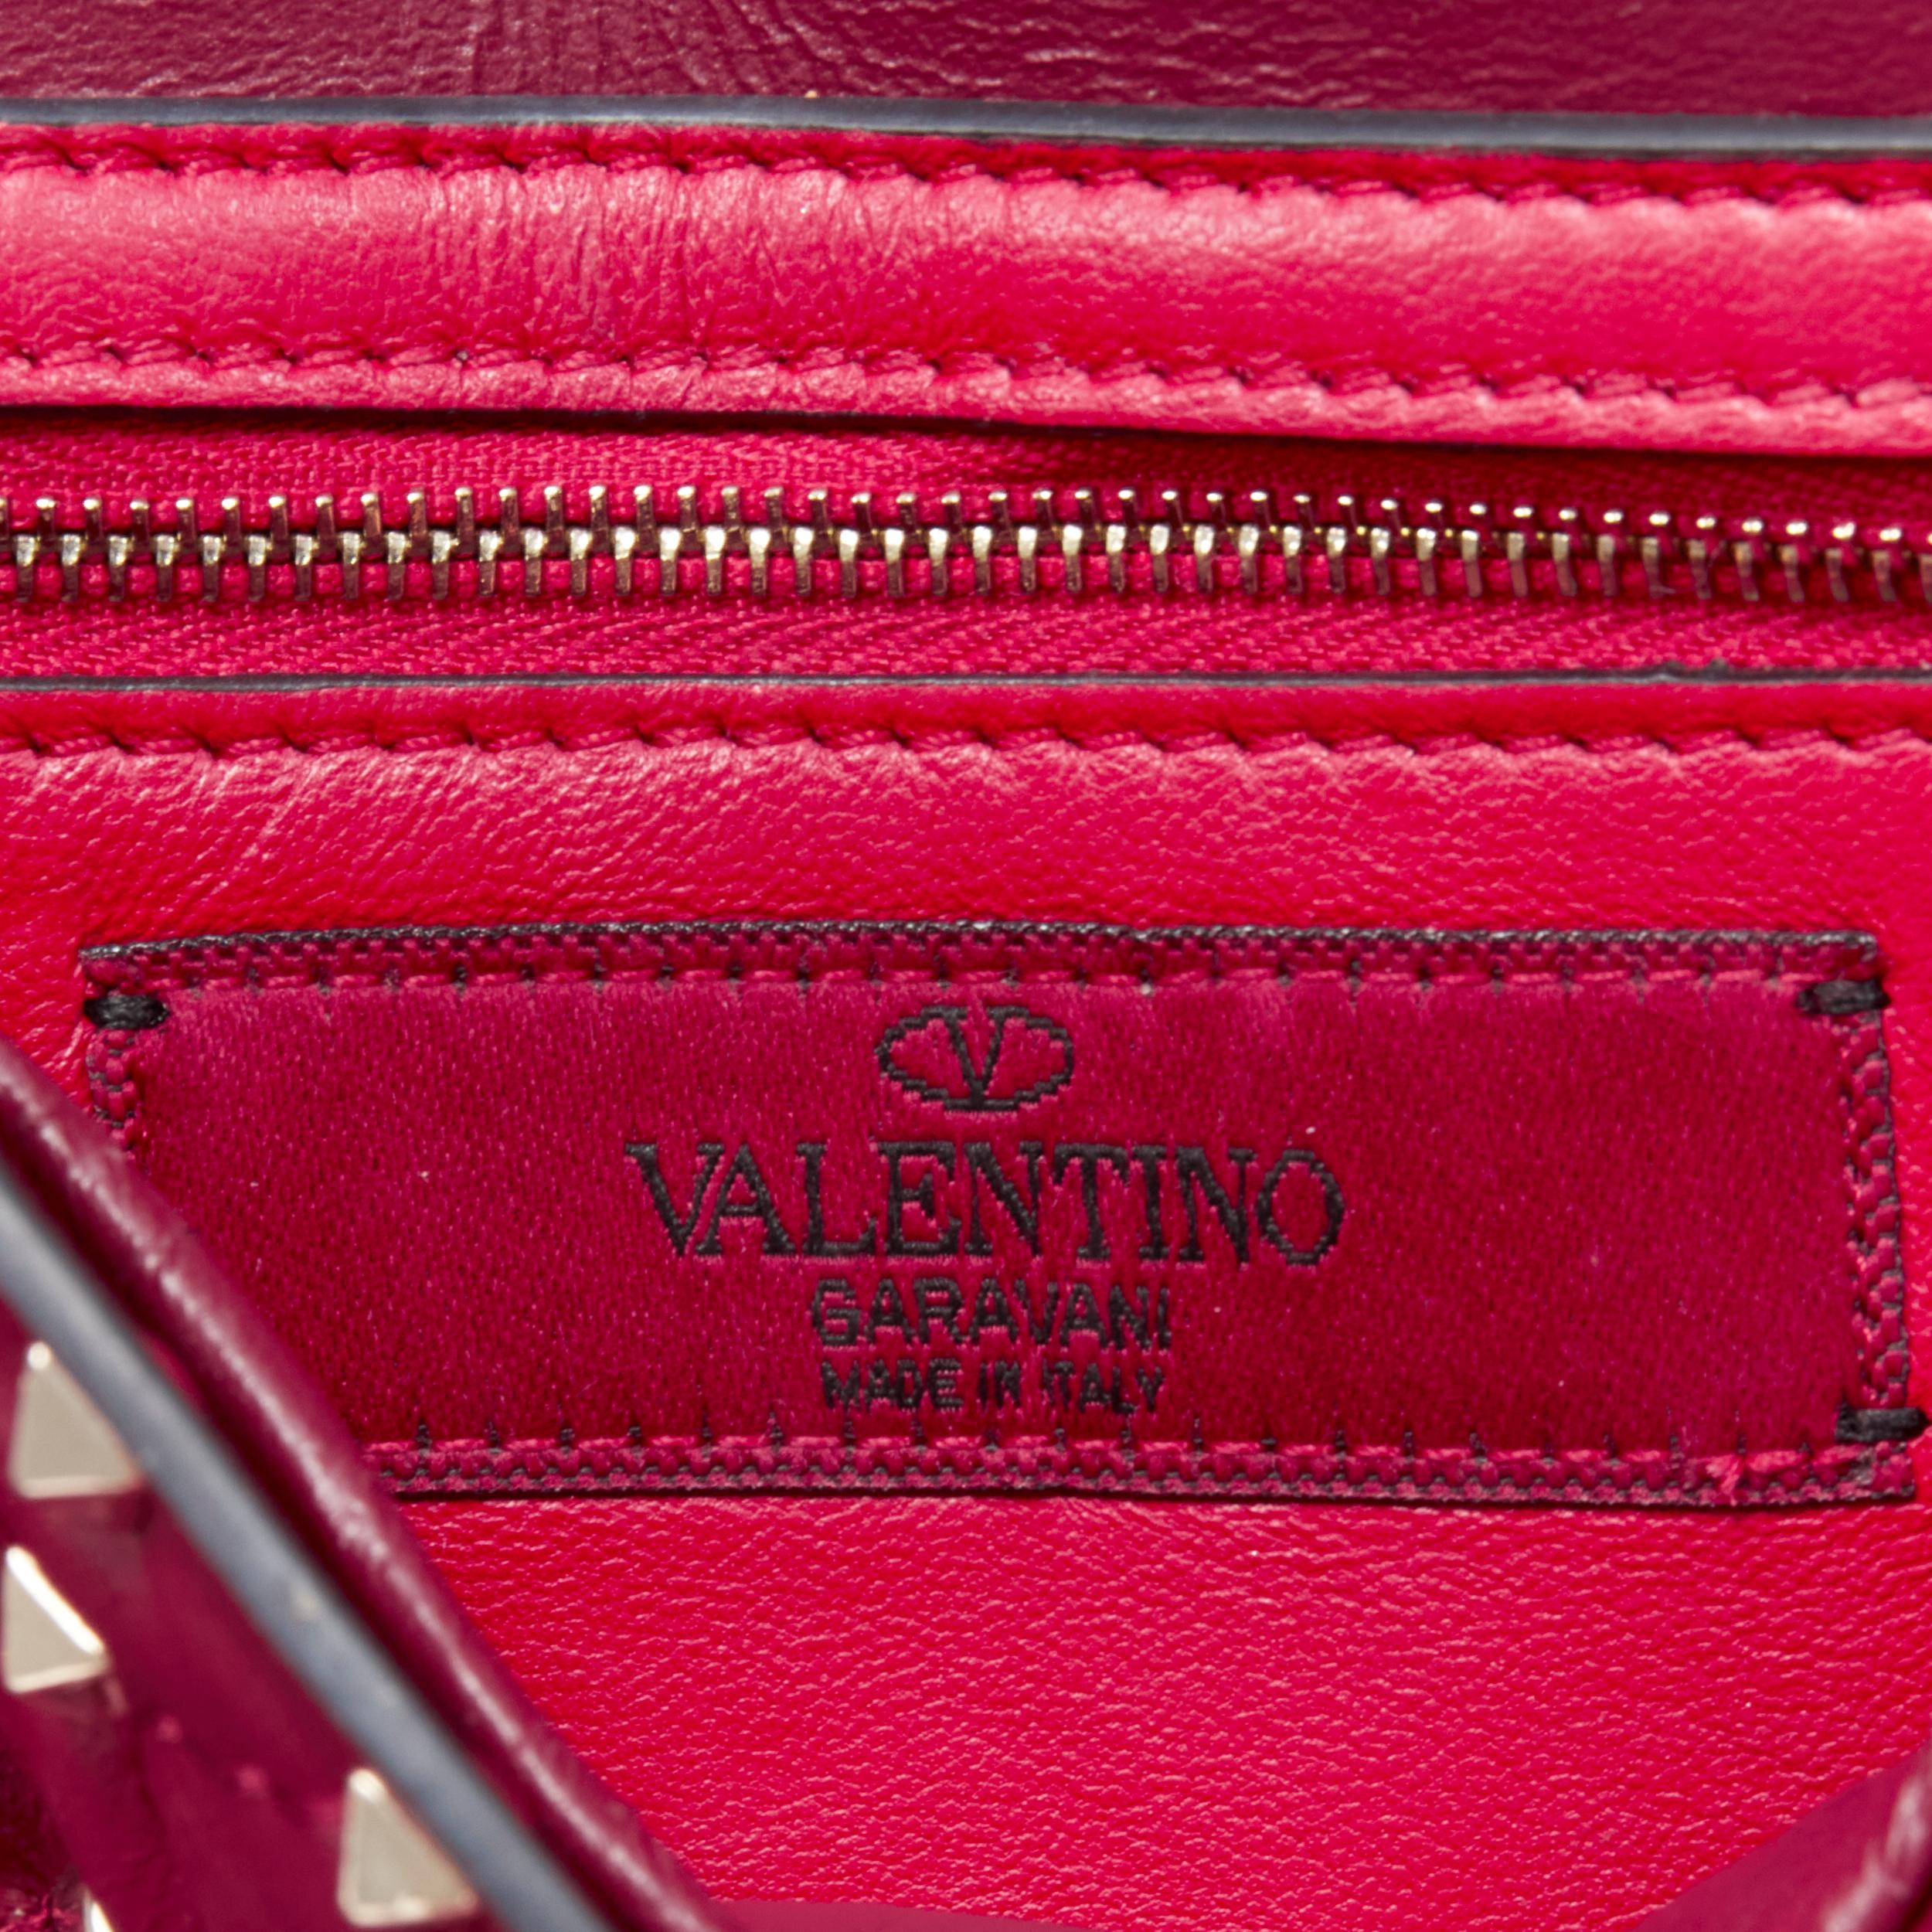 VALENTINO Rockstud Spike Medium Rouge dark red gold studded crossbody flap bag 3